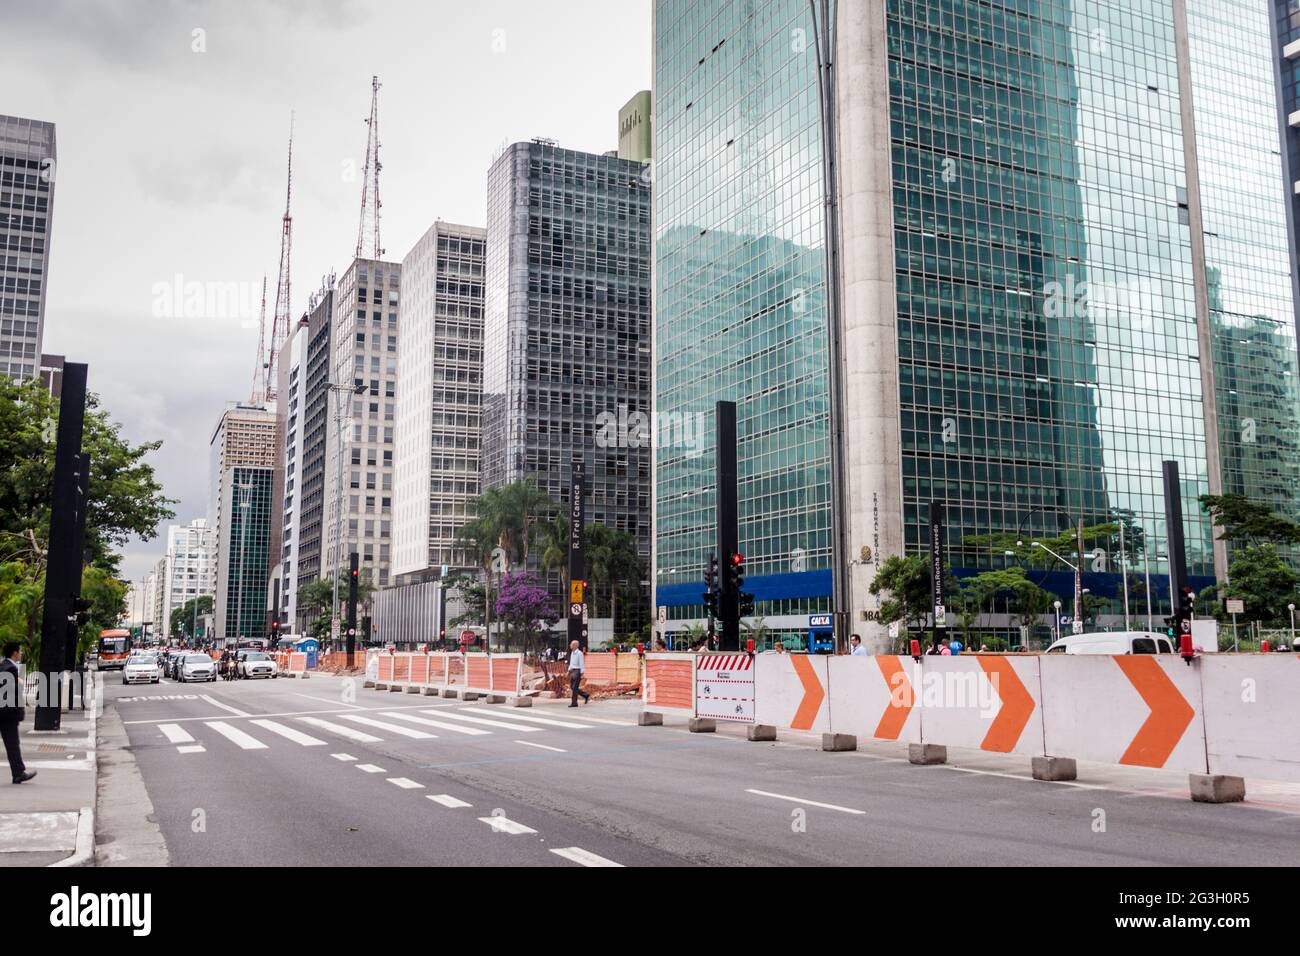 SAO PAULO, BRAZIL - FEBRUARY 2, 2015: View of skyscrapers along Avenida Paulista in Sao Paulo, Brazil Stock Photo